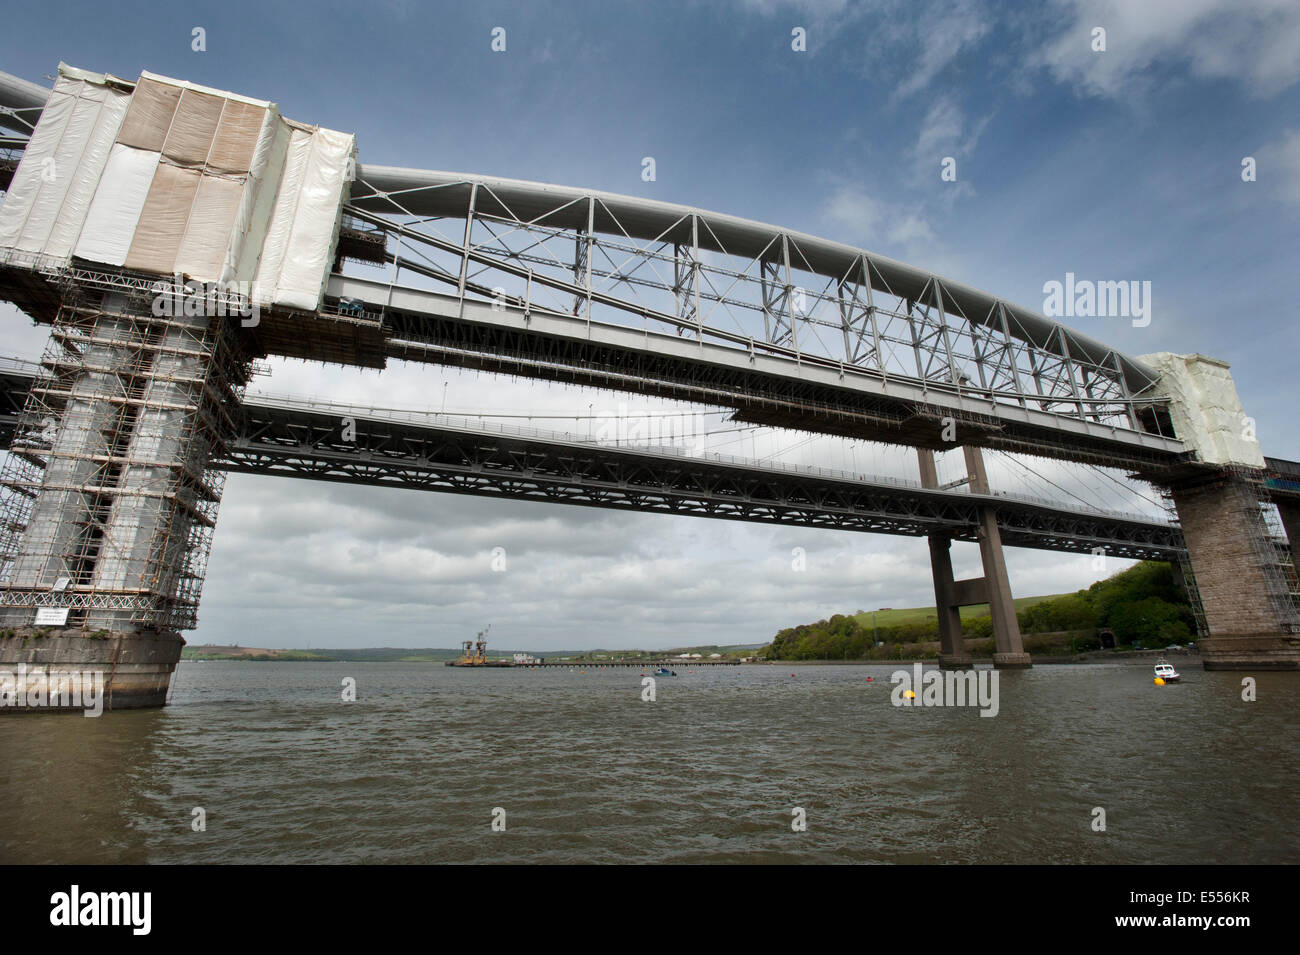 Scaffolding covers the support pillars of The Royal Albert Railway Bridge designed by Isambard Kingdom Brunel. Stock Photo